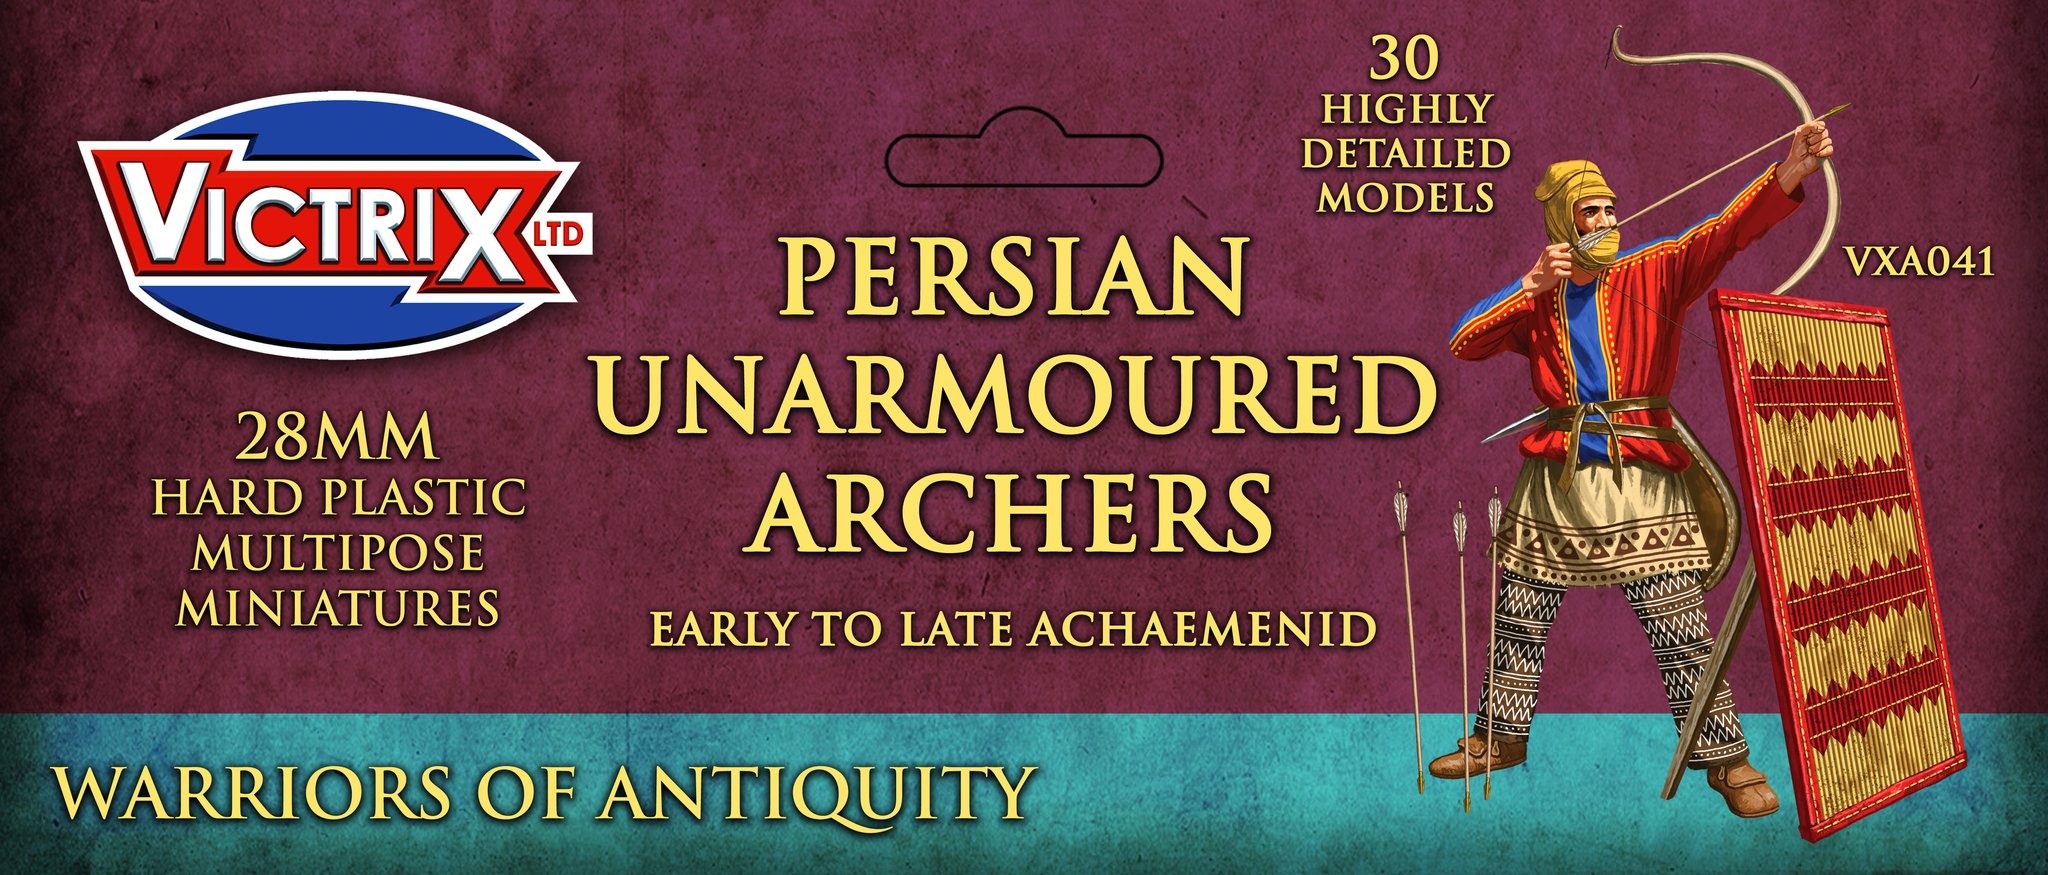 Persian Unarmoured Archers (30)